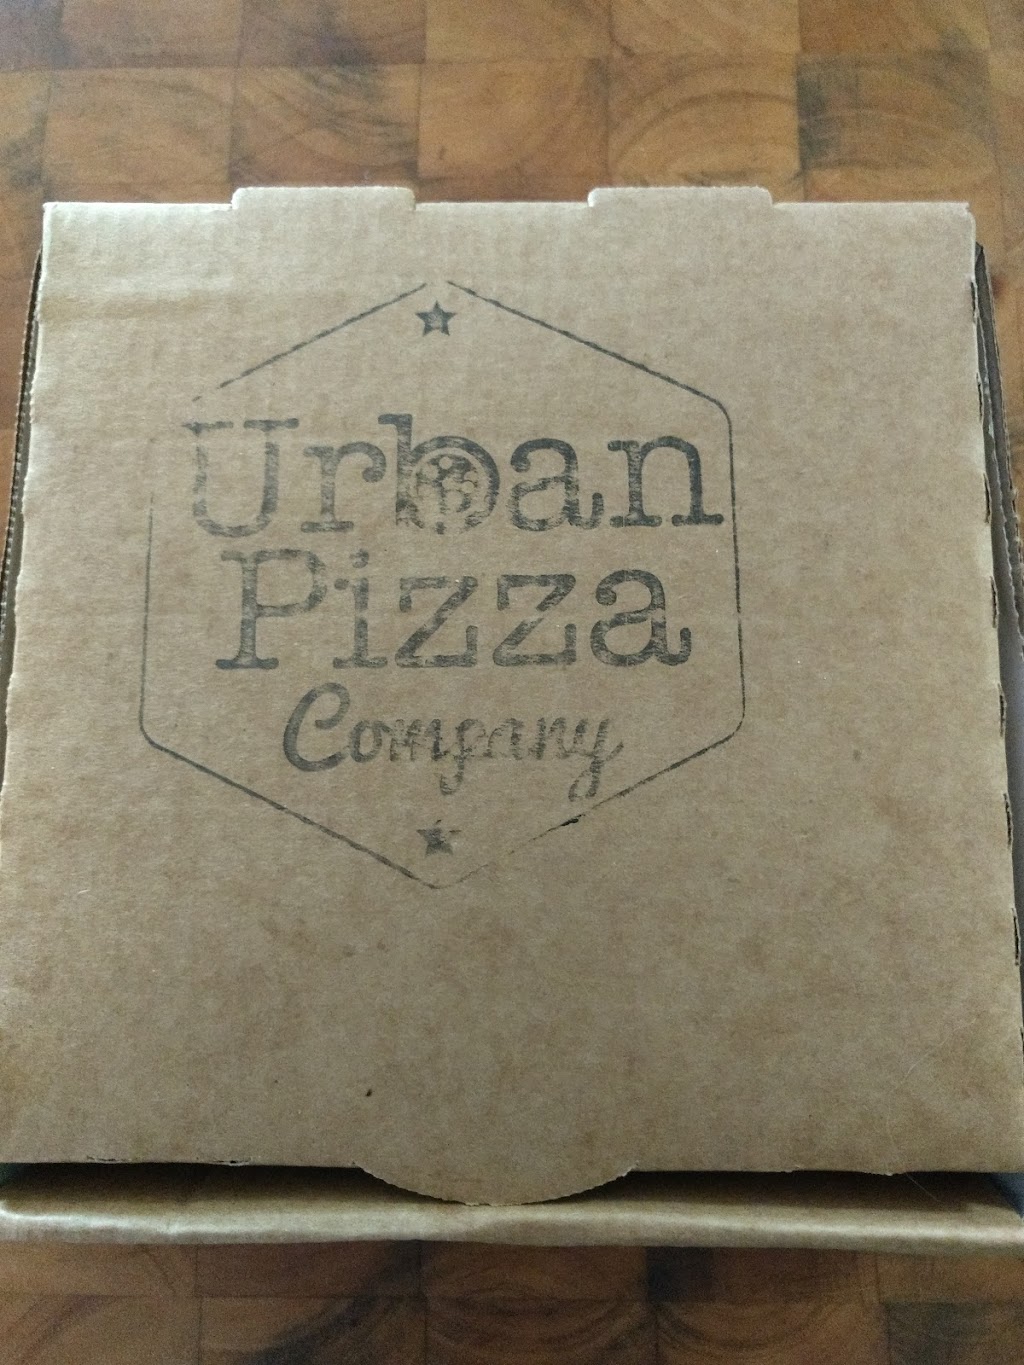 Urban Pizza Company | 19/445 Hume St, Toowoomba City QLD 4350, Australia | Phone: (07) 4613 4730